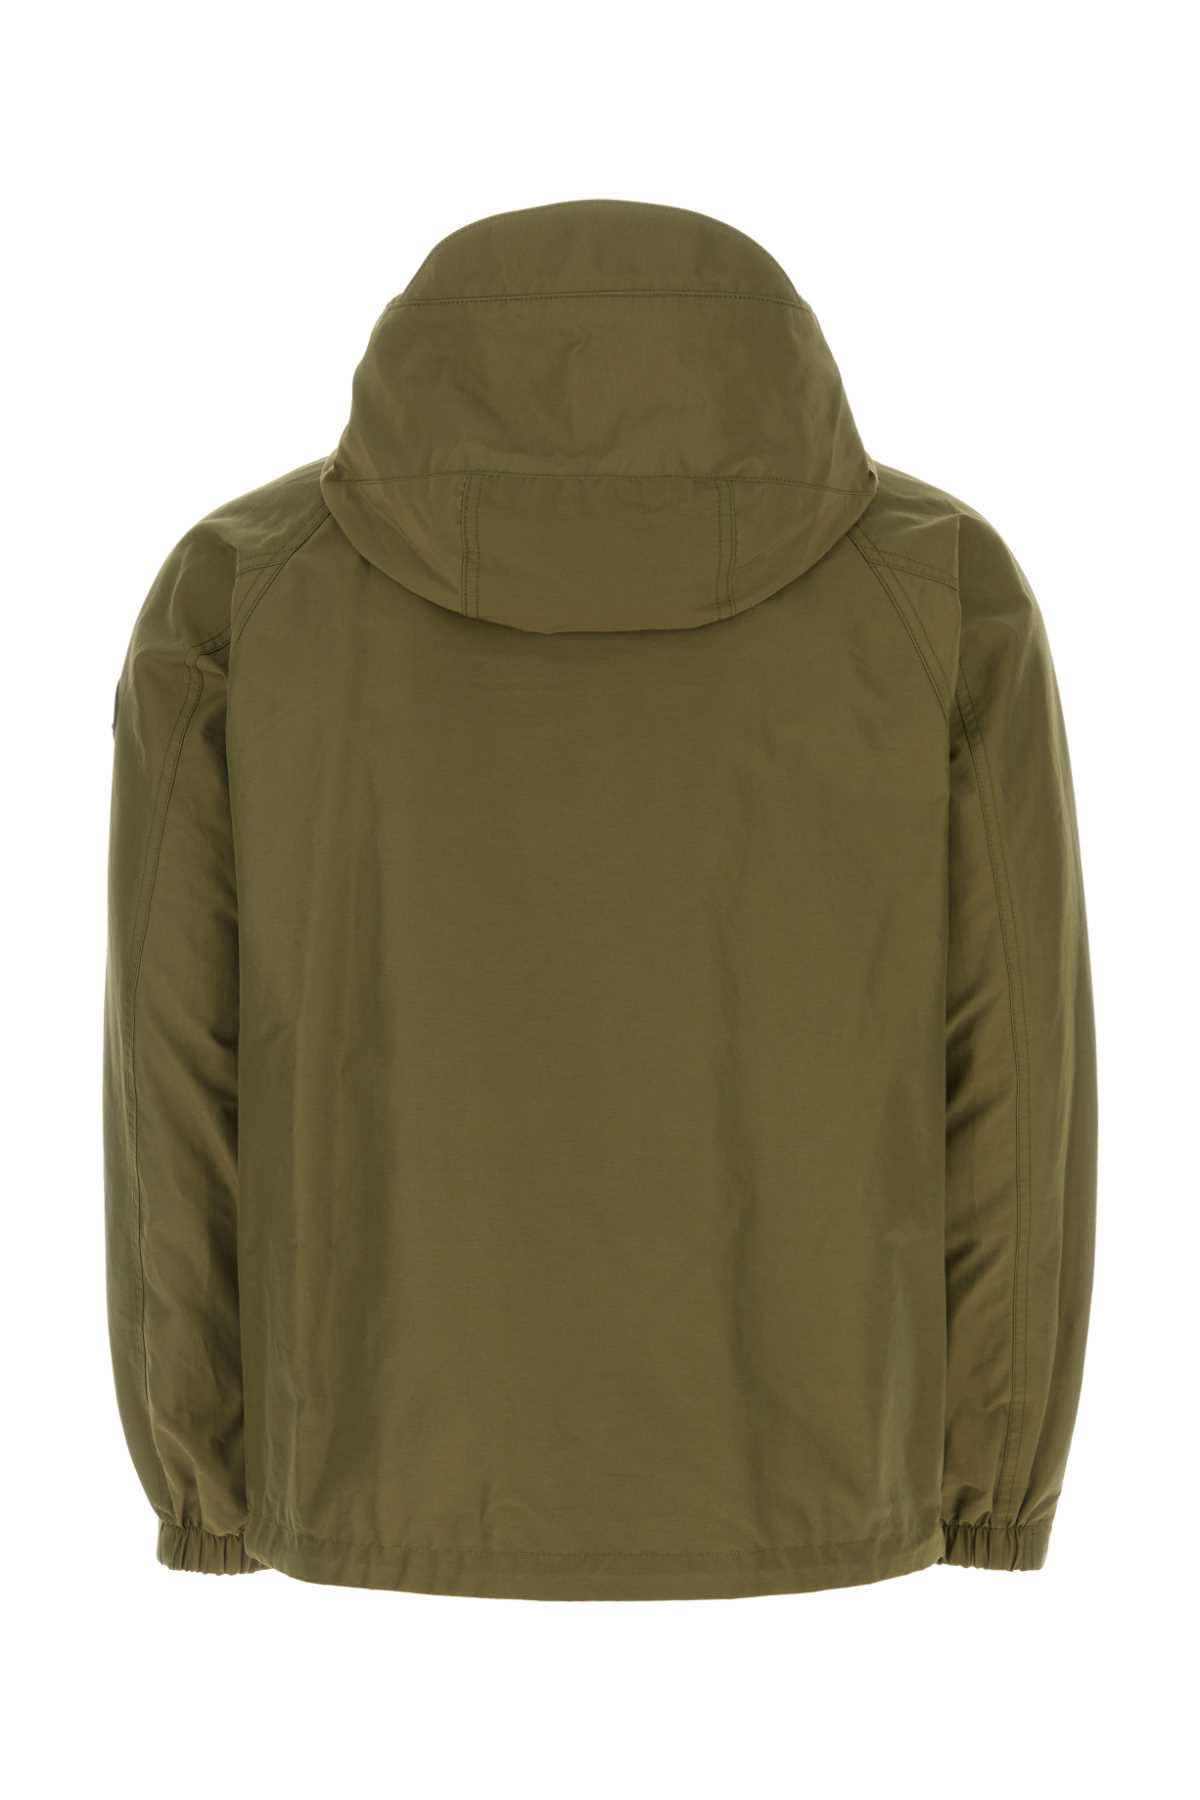 Woolrich Army Green Cotton Blend Cruiser Jacket In Lko